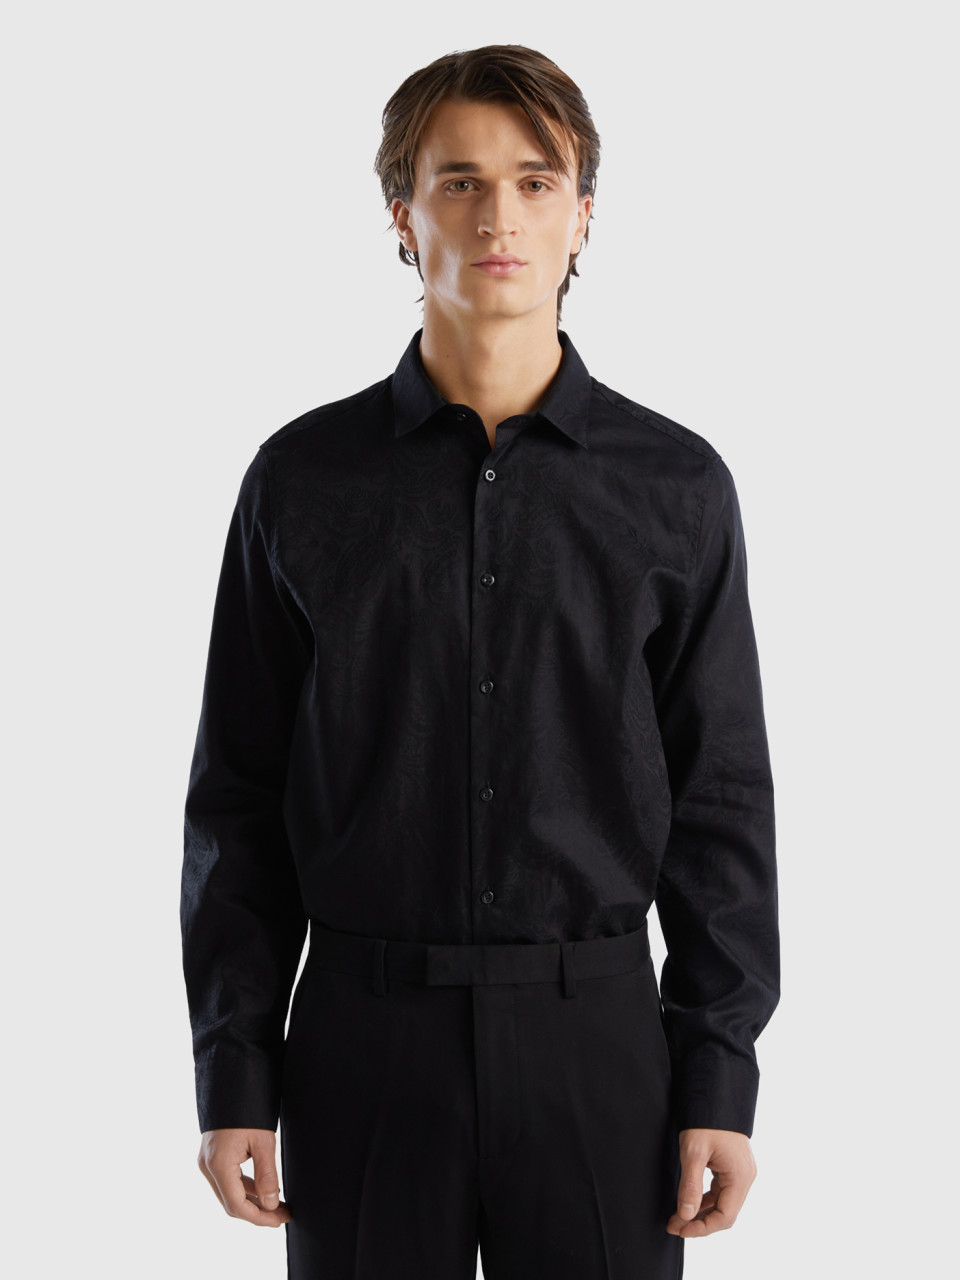 Benetton, Shirt With Jacquard Pattern, Black, Men